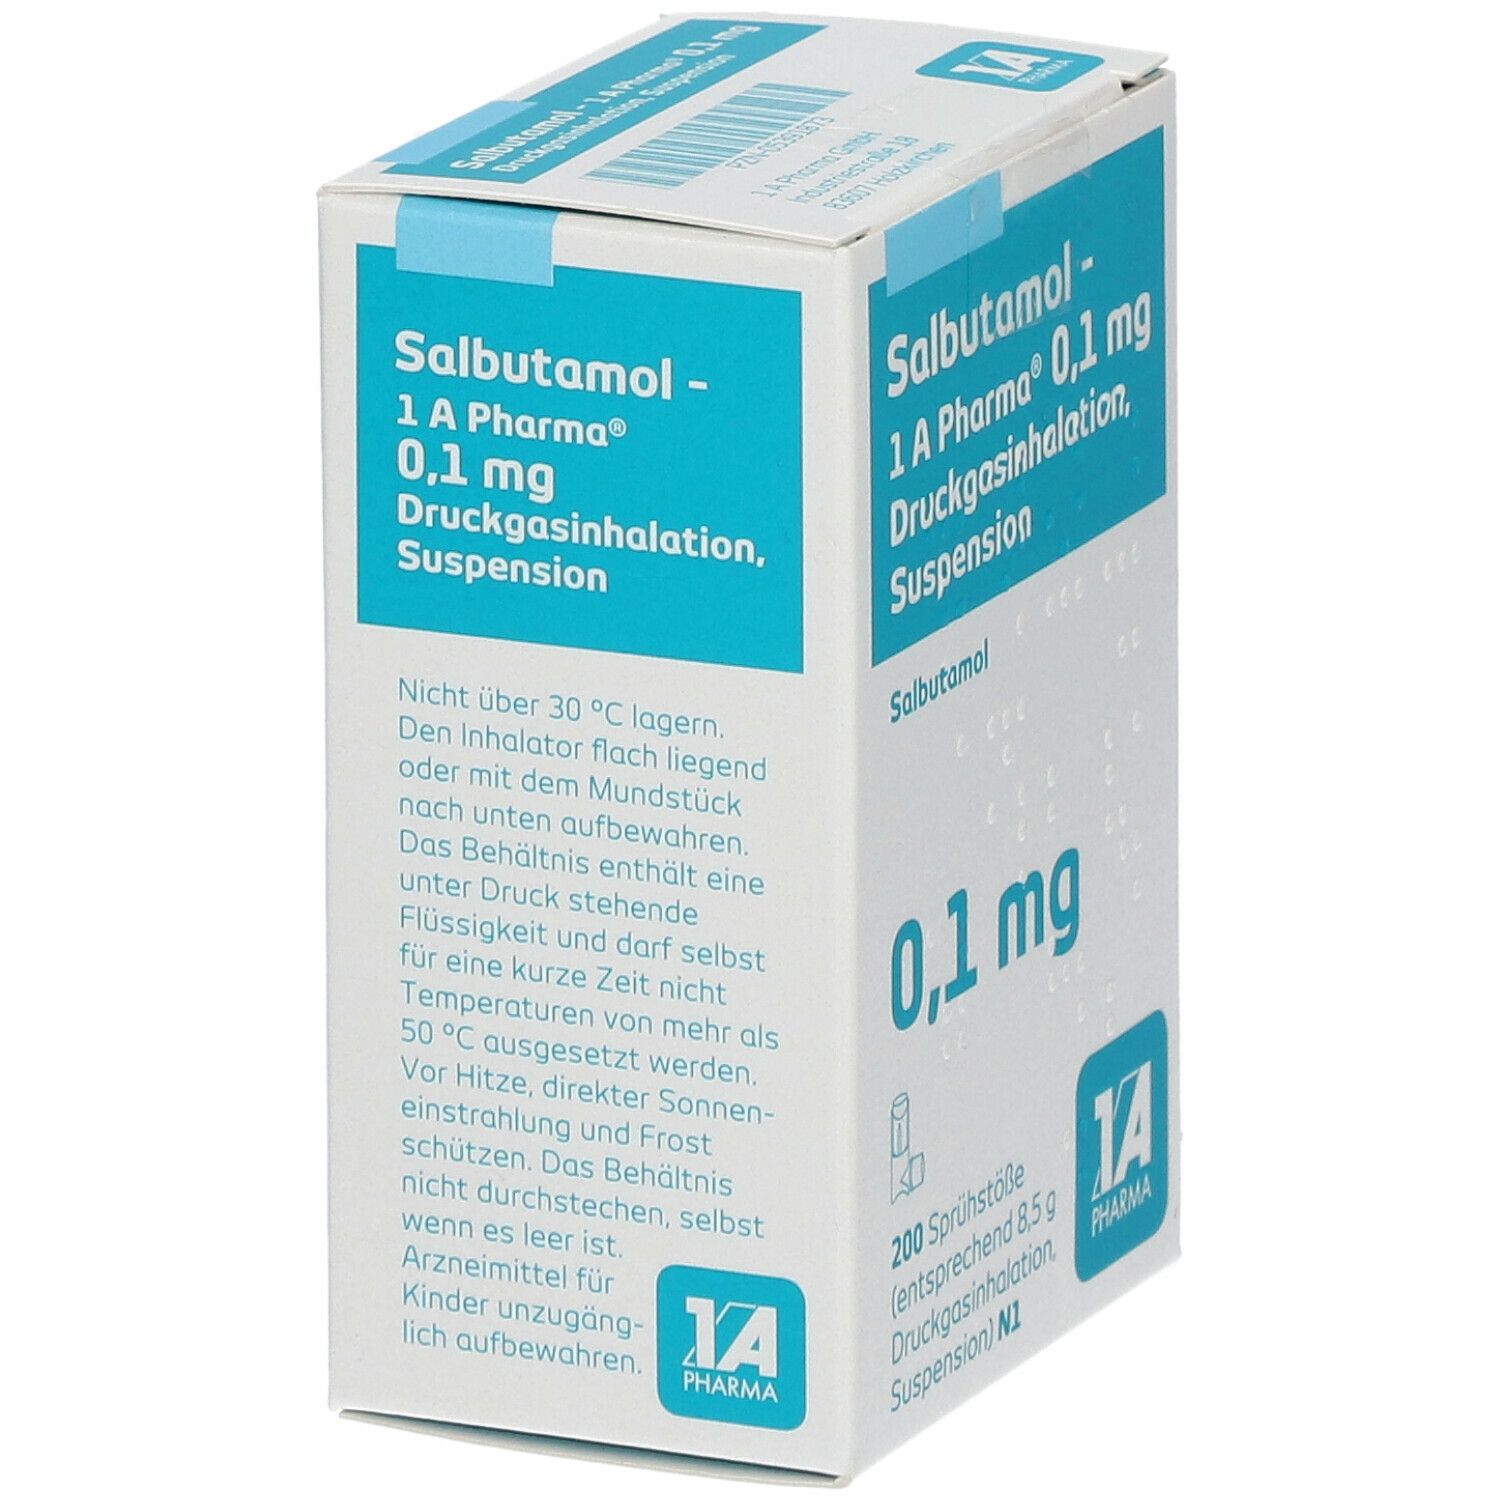 Salbutamol 1A Pharma® 0.1Mg